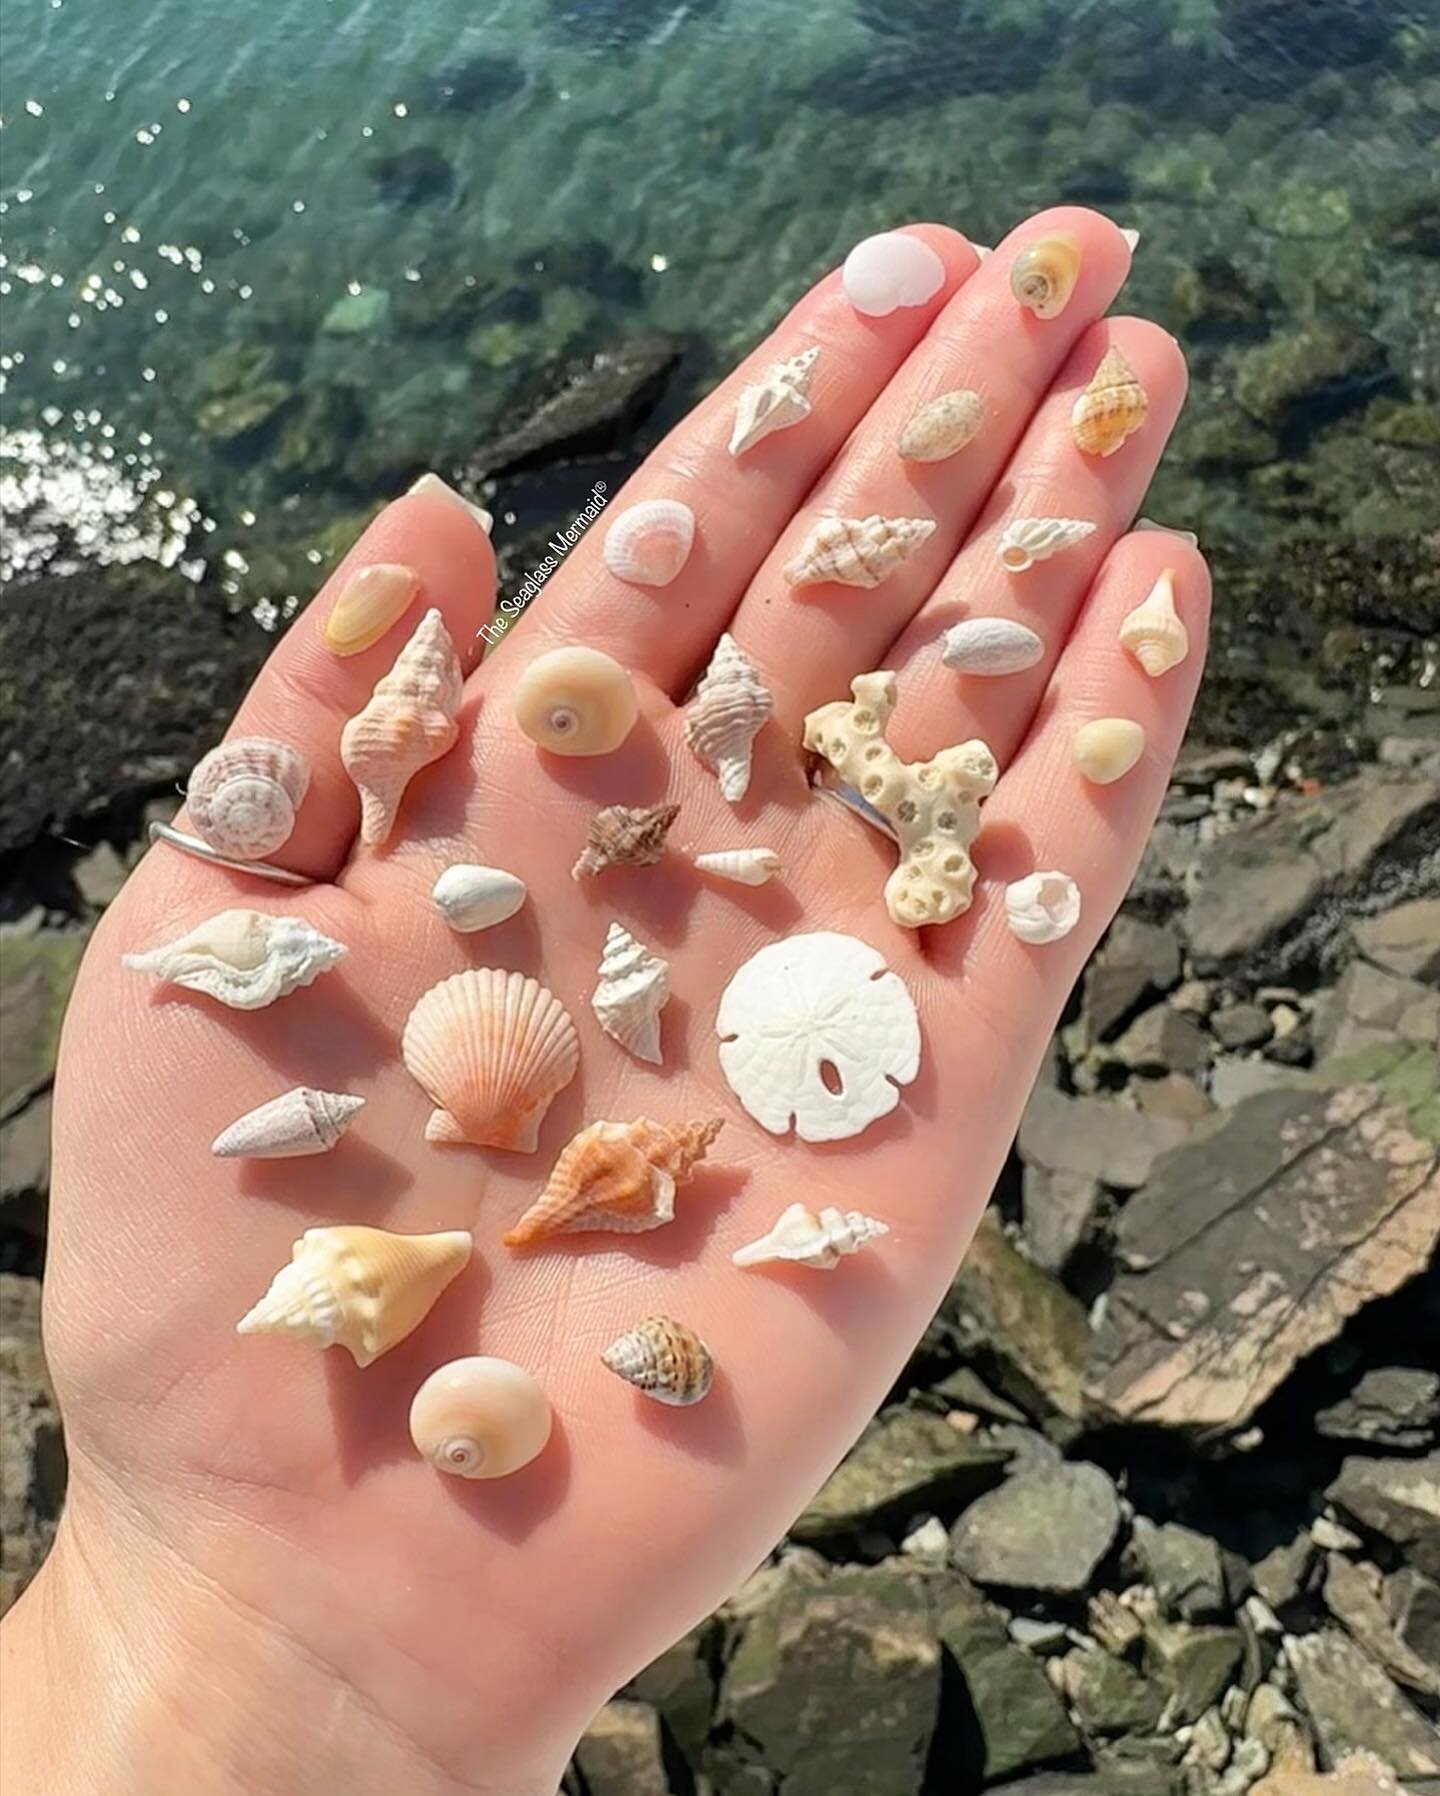 Favorite tiny shells from Florida 🐚 #tinytuesday

#shells #seashells #shelling #shell #sanddollar #scallopshell #coral #sharkeye #whelk #florida #travel #shellyeah #beachcombing